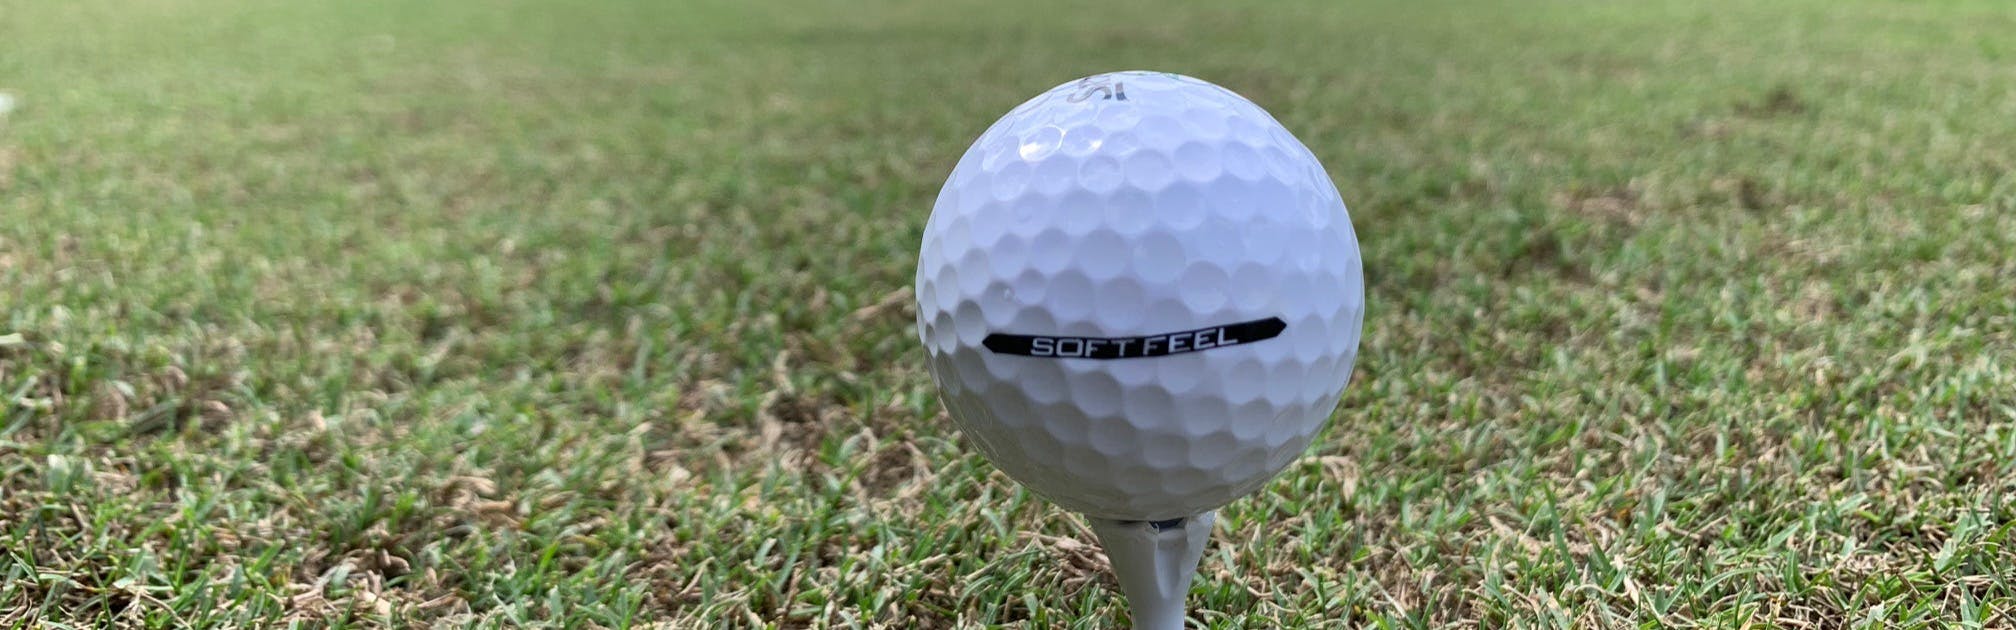 Expert Review: Srixon Soft Feel 12 Golf Balls 1 Dozen | Curated.com